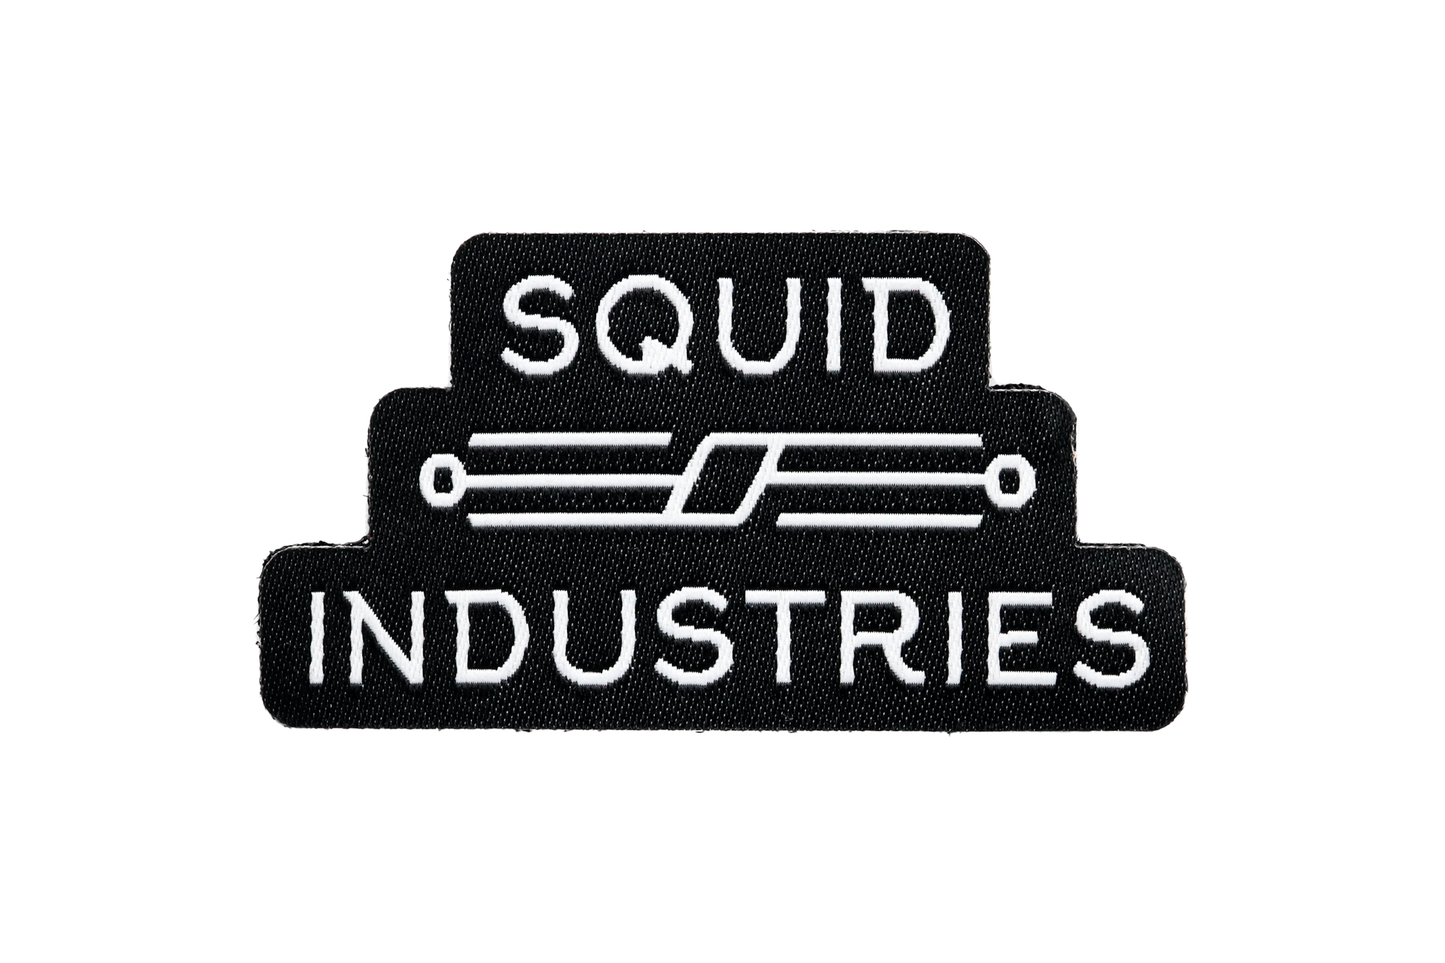 squid industries logo patch